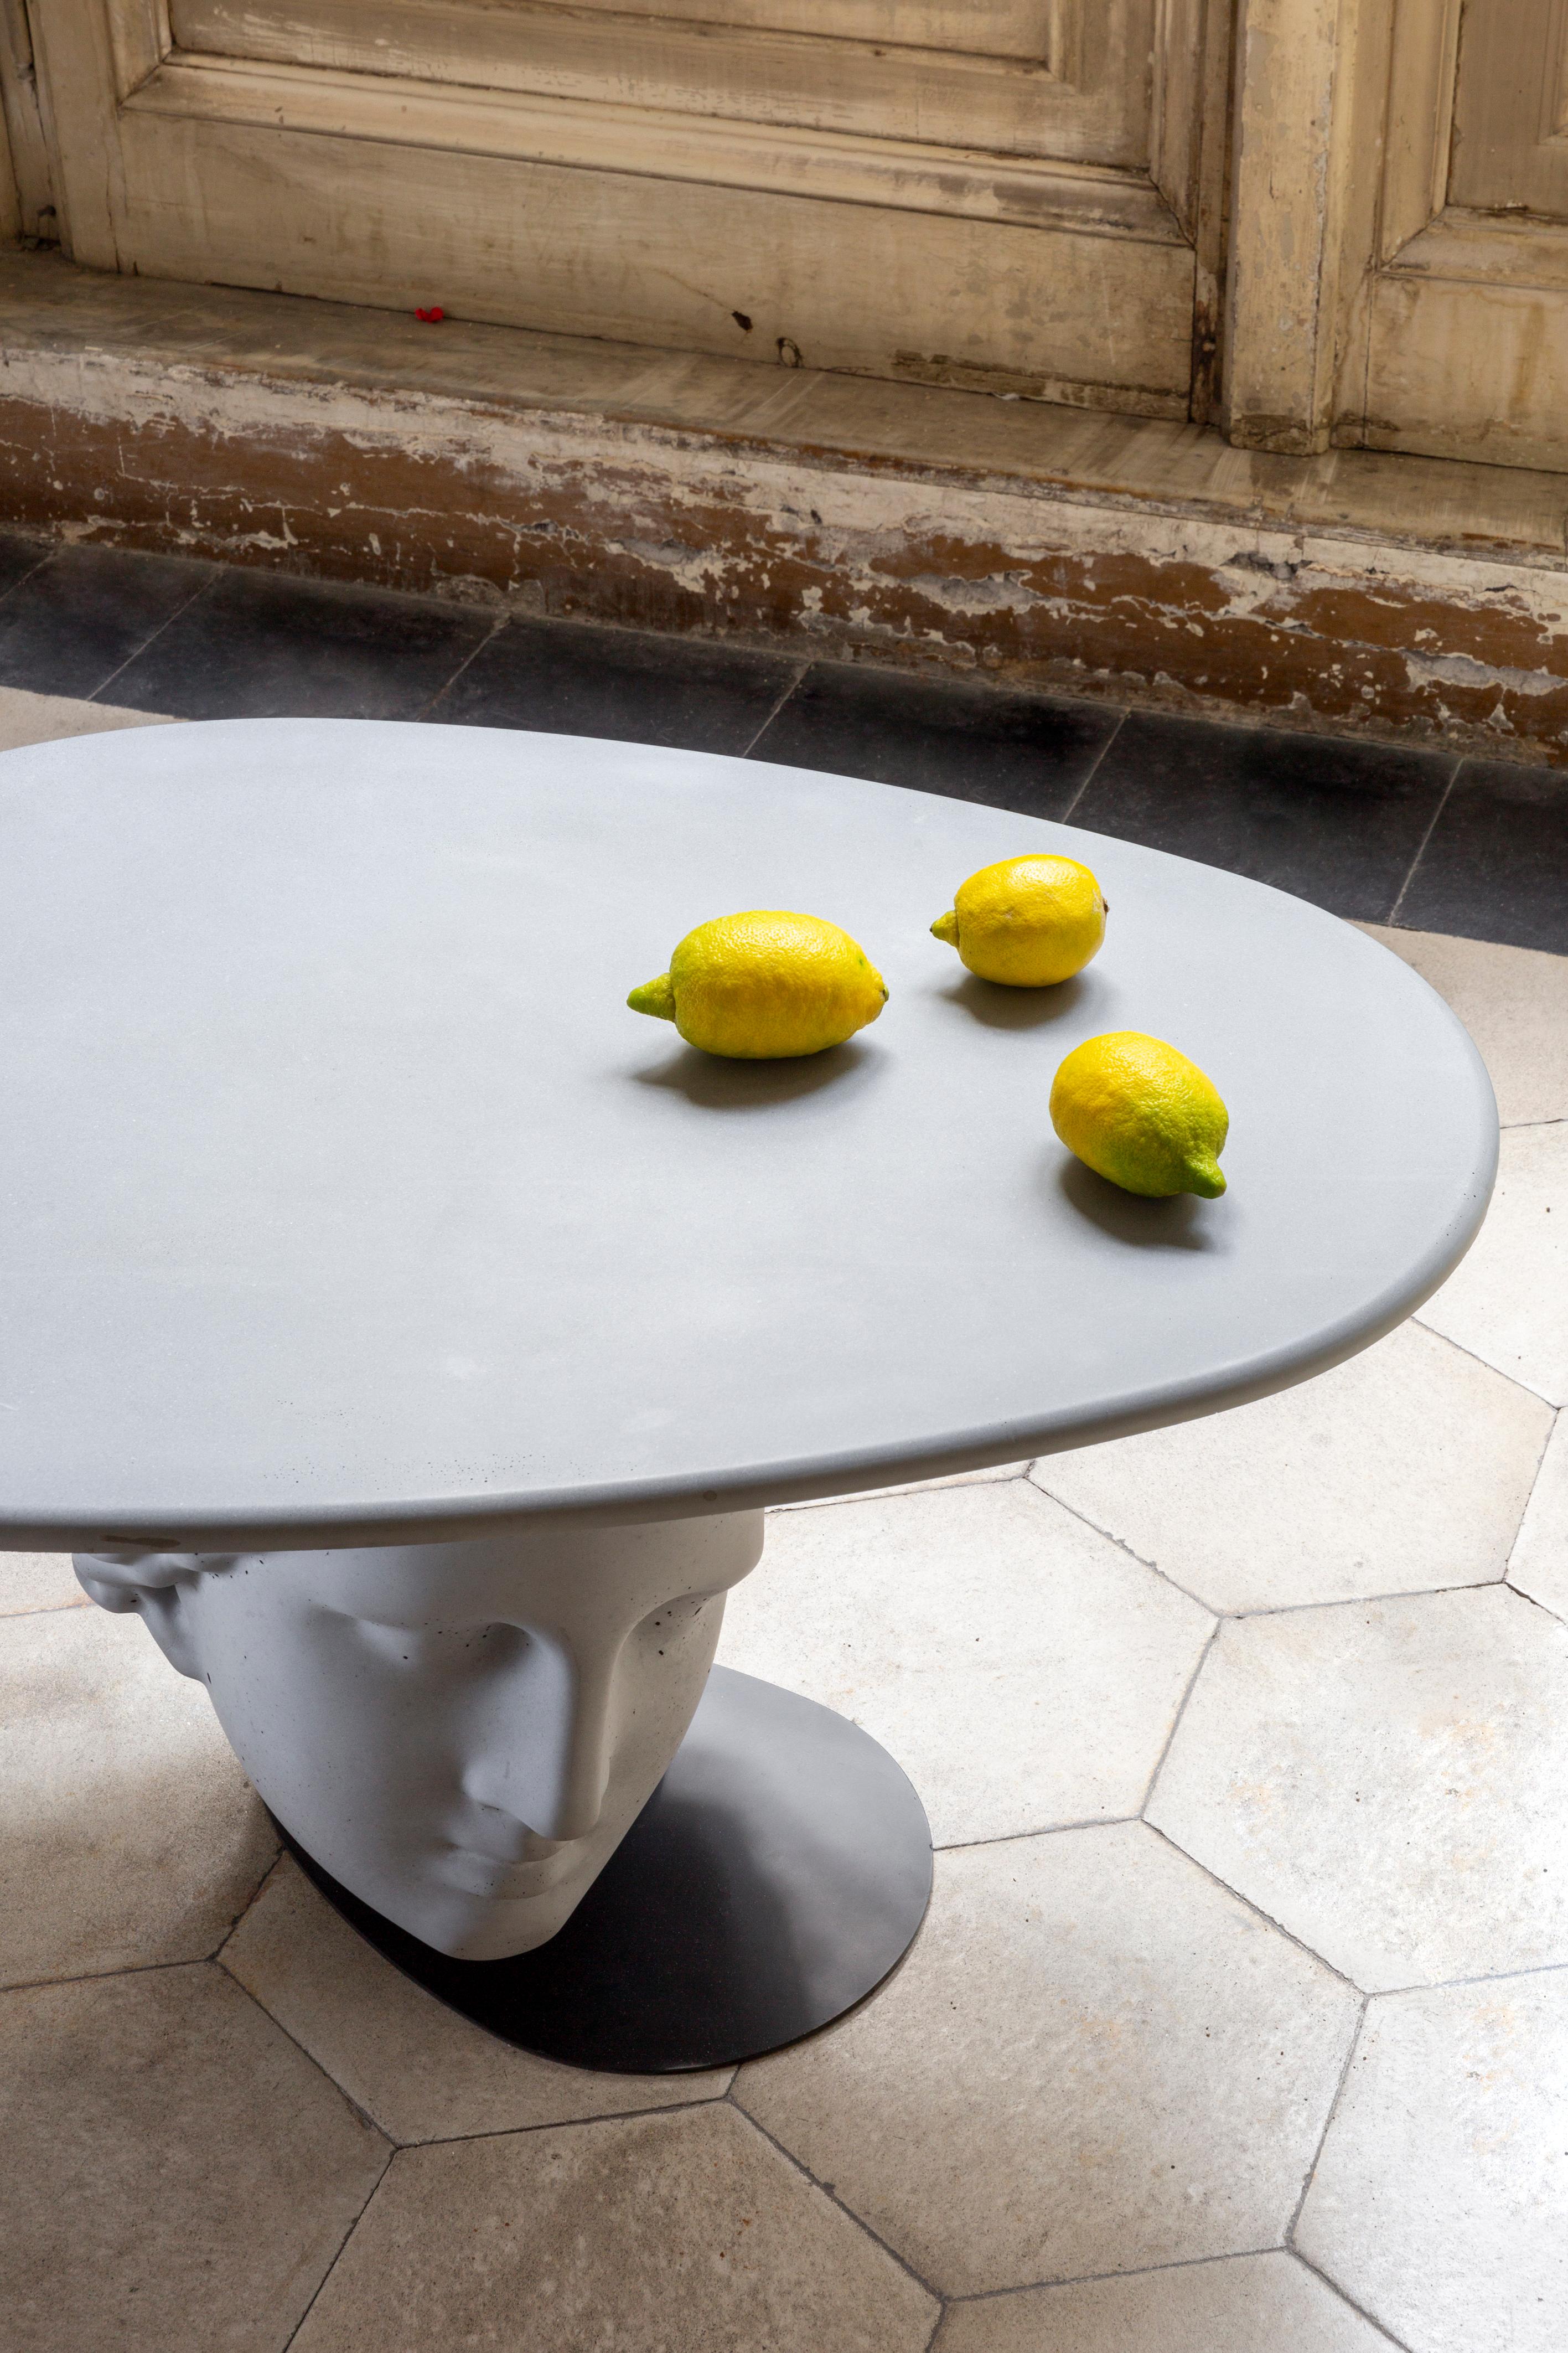 Classical Roman 21st Century Studio Irvine Betti Mod.II Coffee Side Table Concrete Grey Cement For Sale